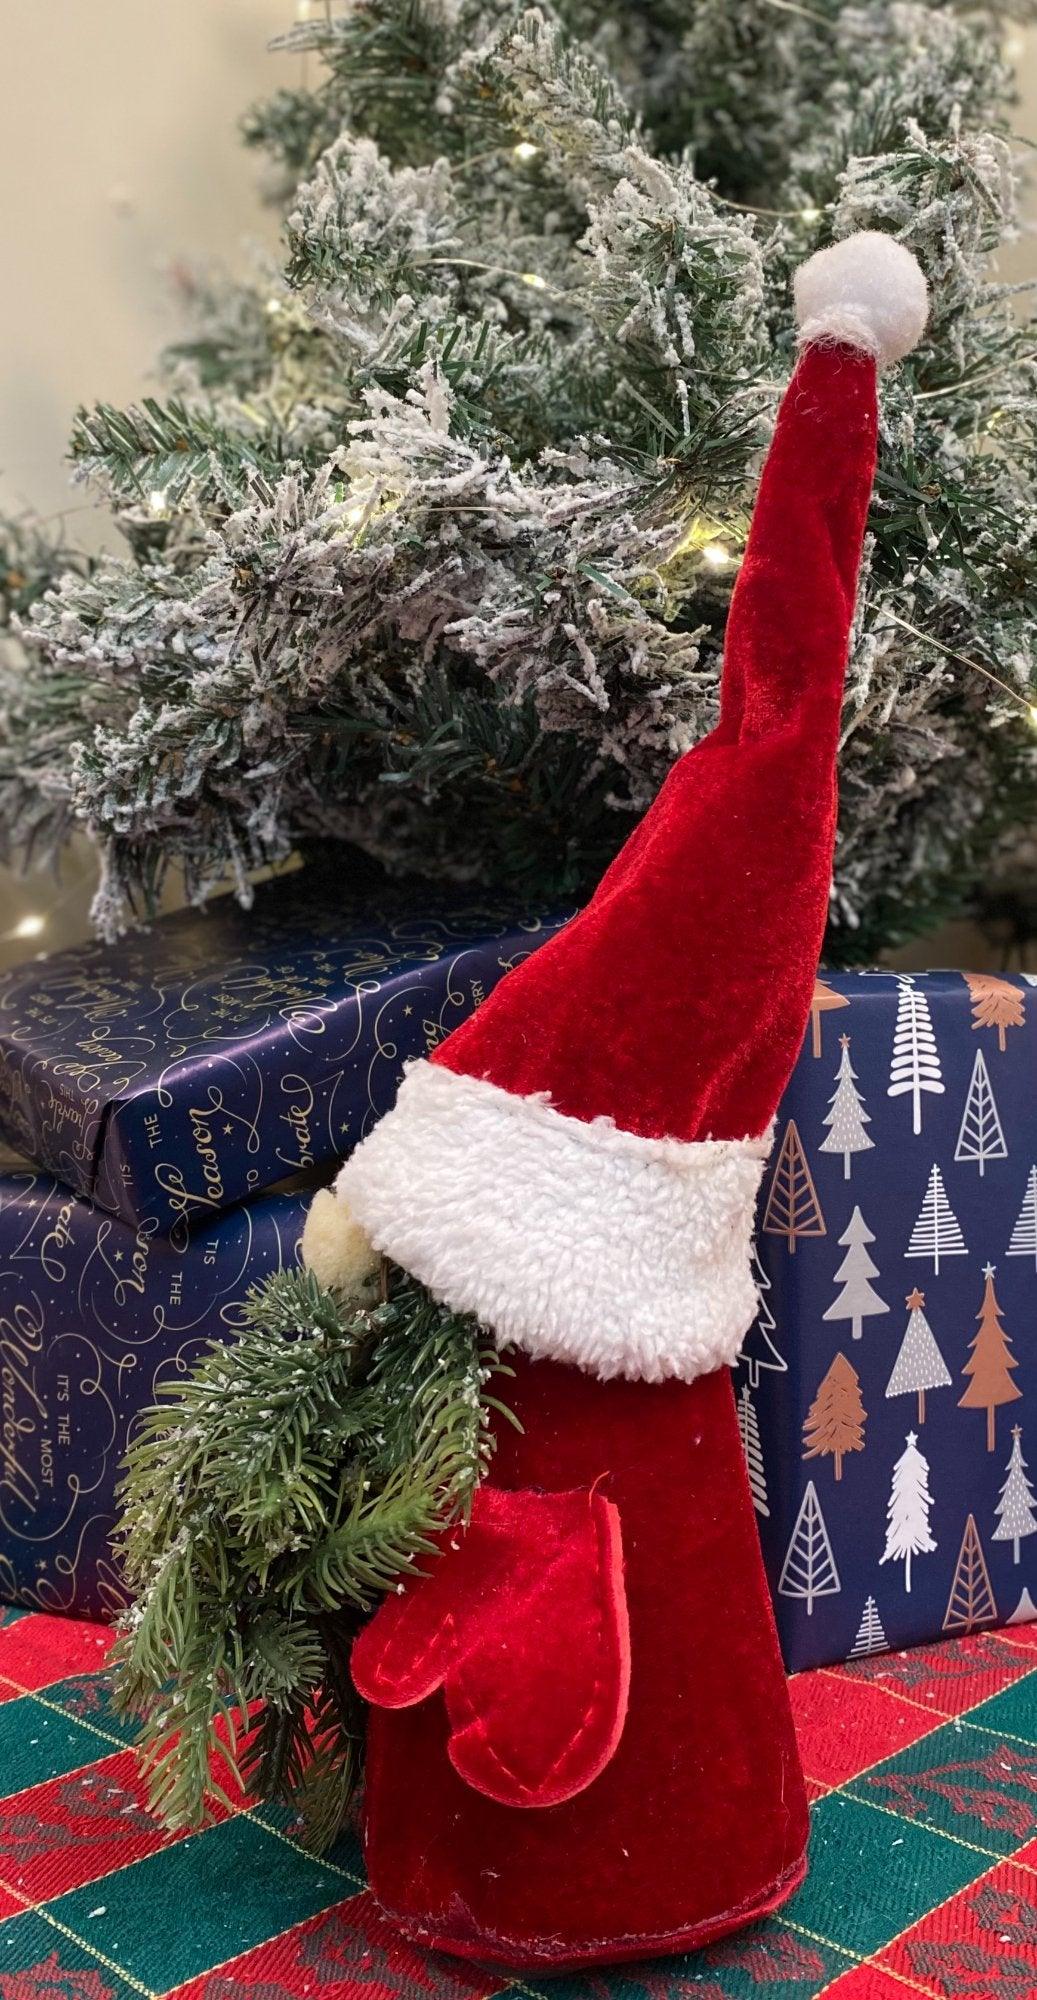 Santa With Tree Branch Decoration 30cm - £20.99 - Christmas Ornaments 